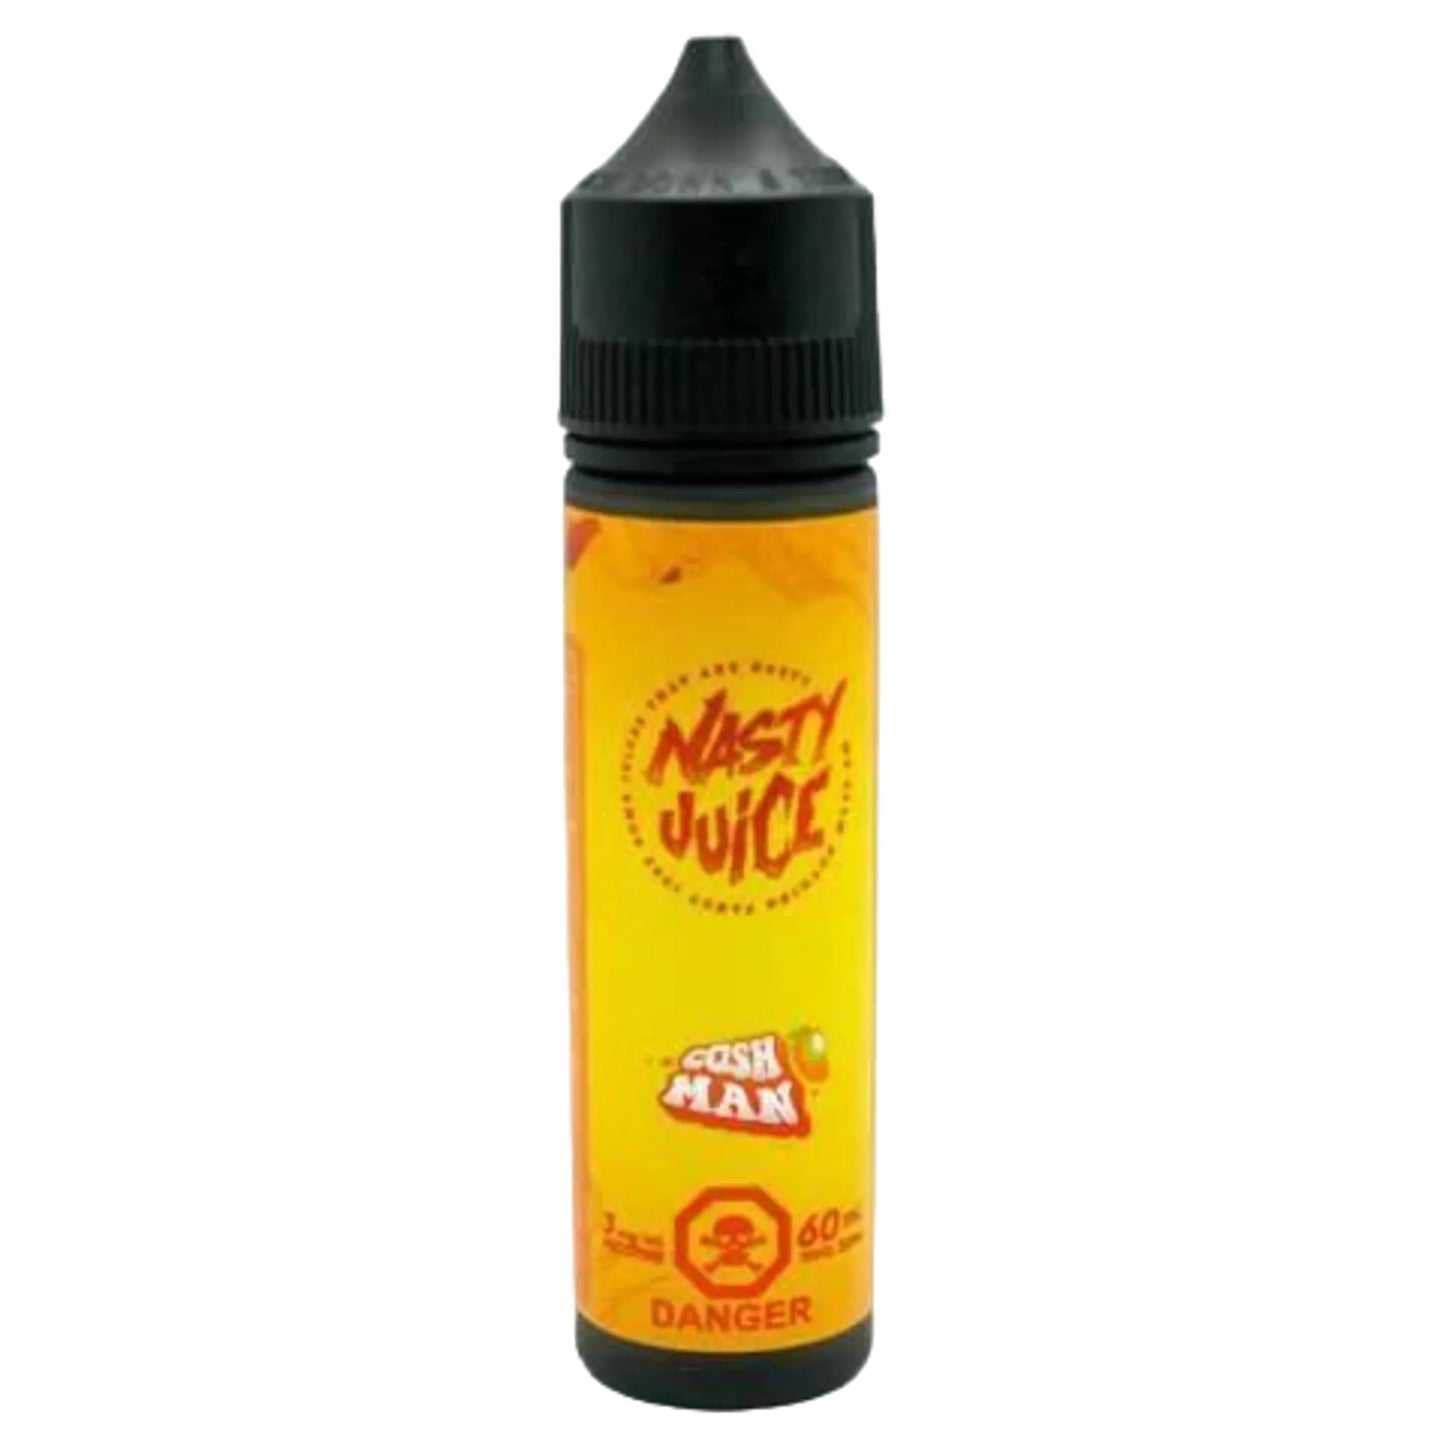 Nasty Juice - Cash Man (Cush Man) - 60 ml